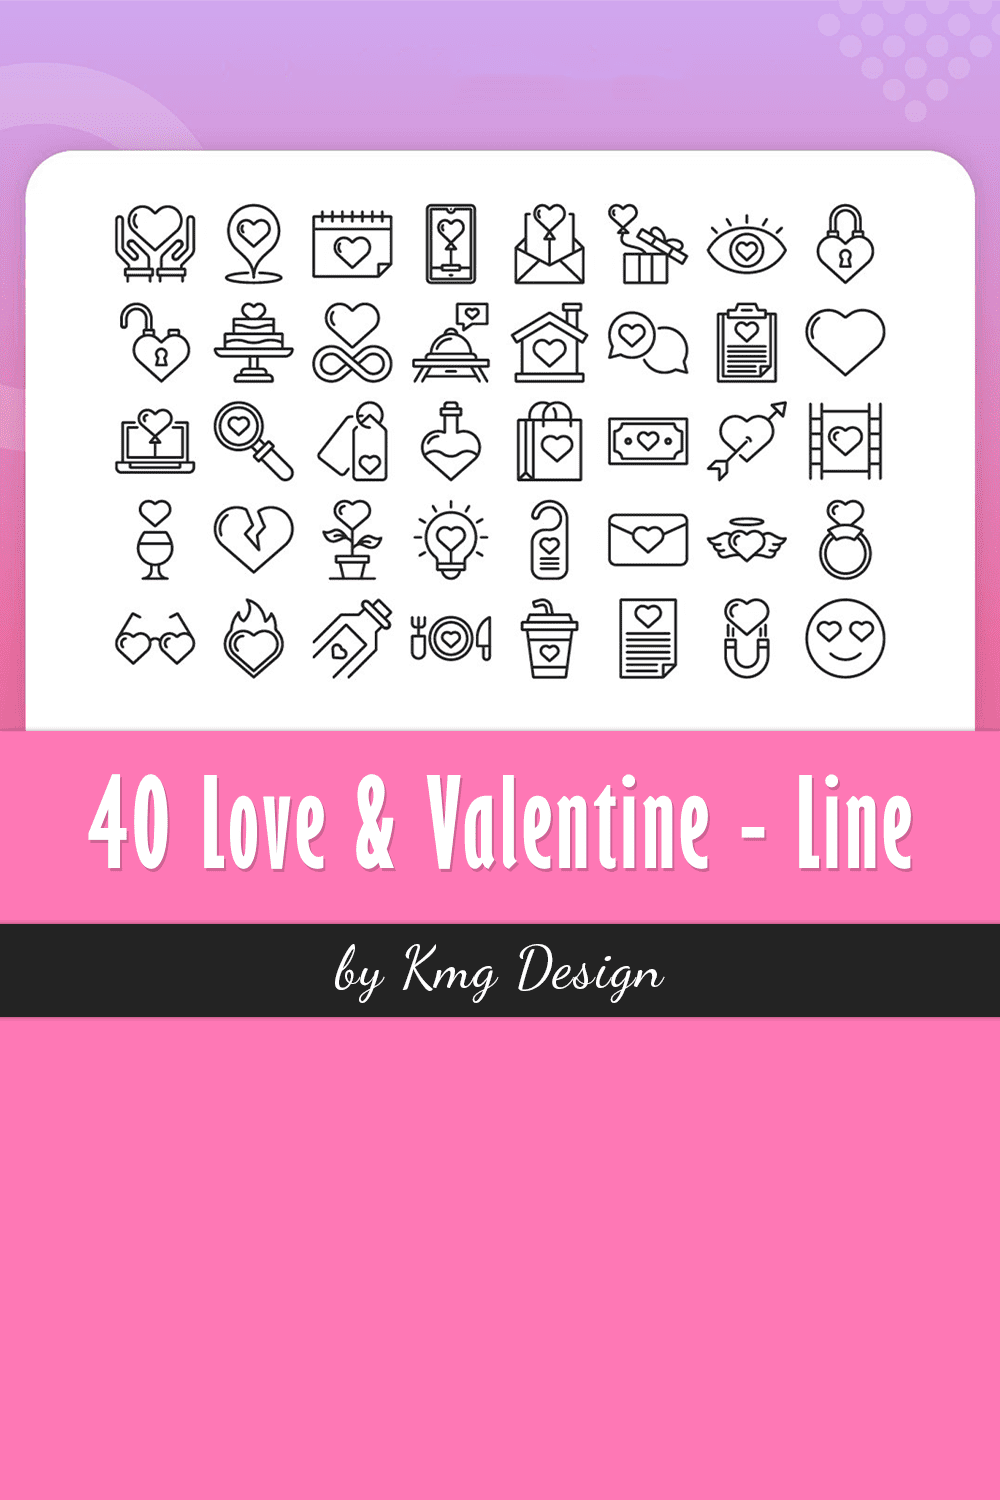 40 Love & Valentine - Line - Pinterest.